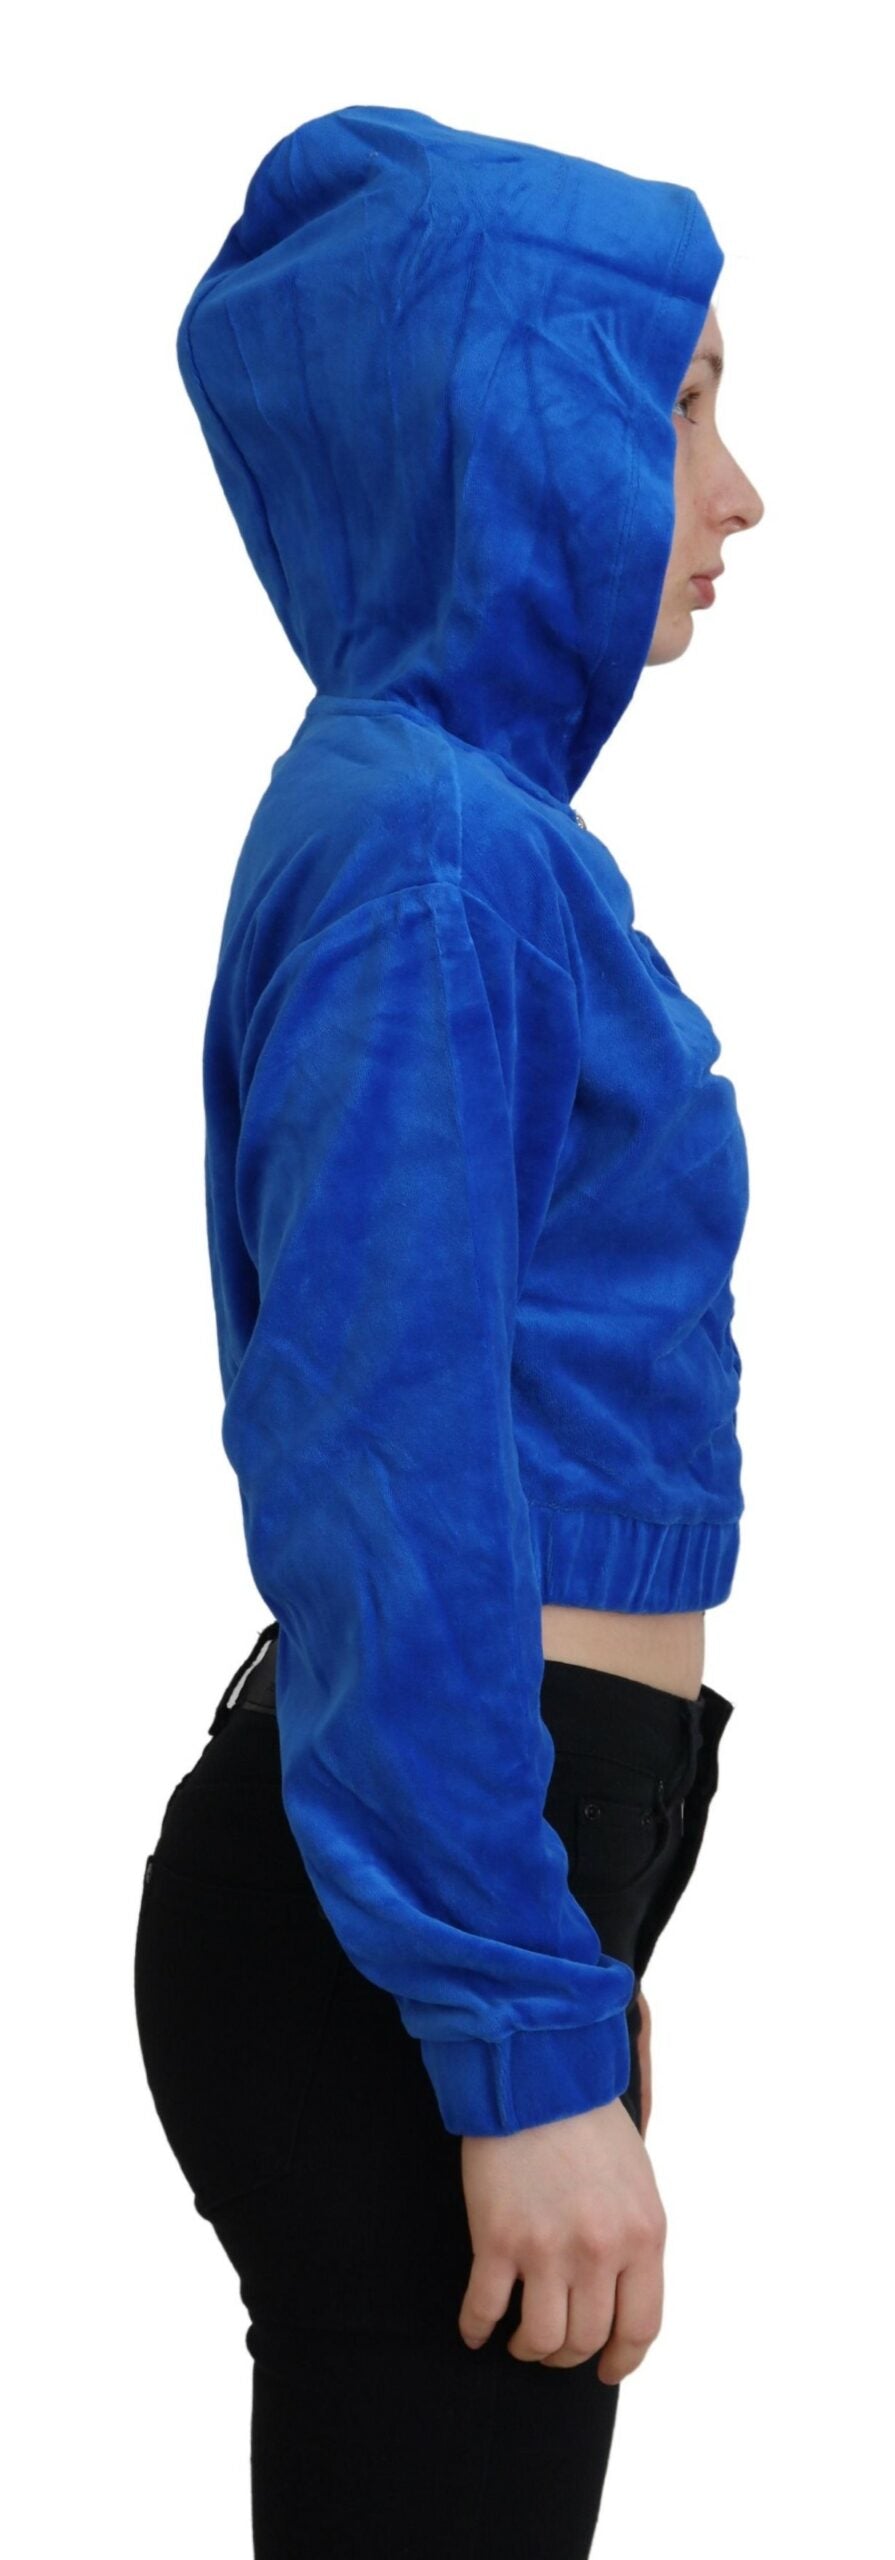 Blue Cotton Full Zip Cropped Hooded Sweatshirt Sweater